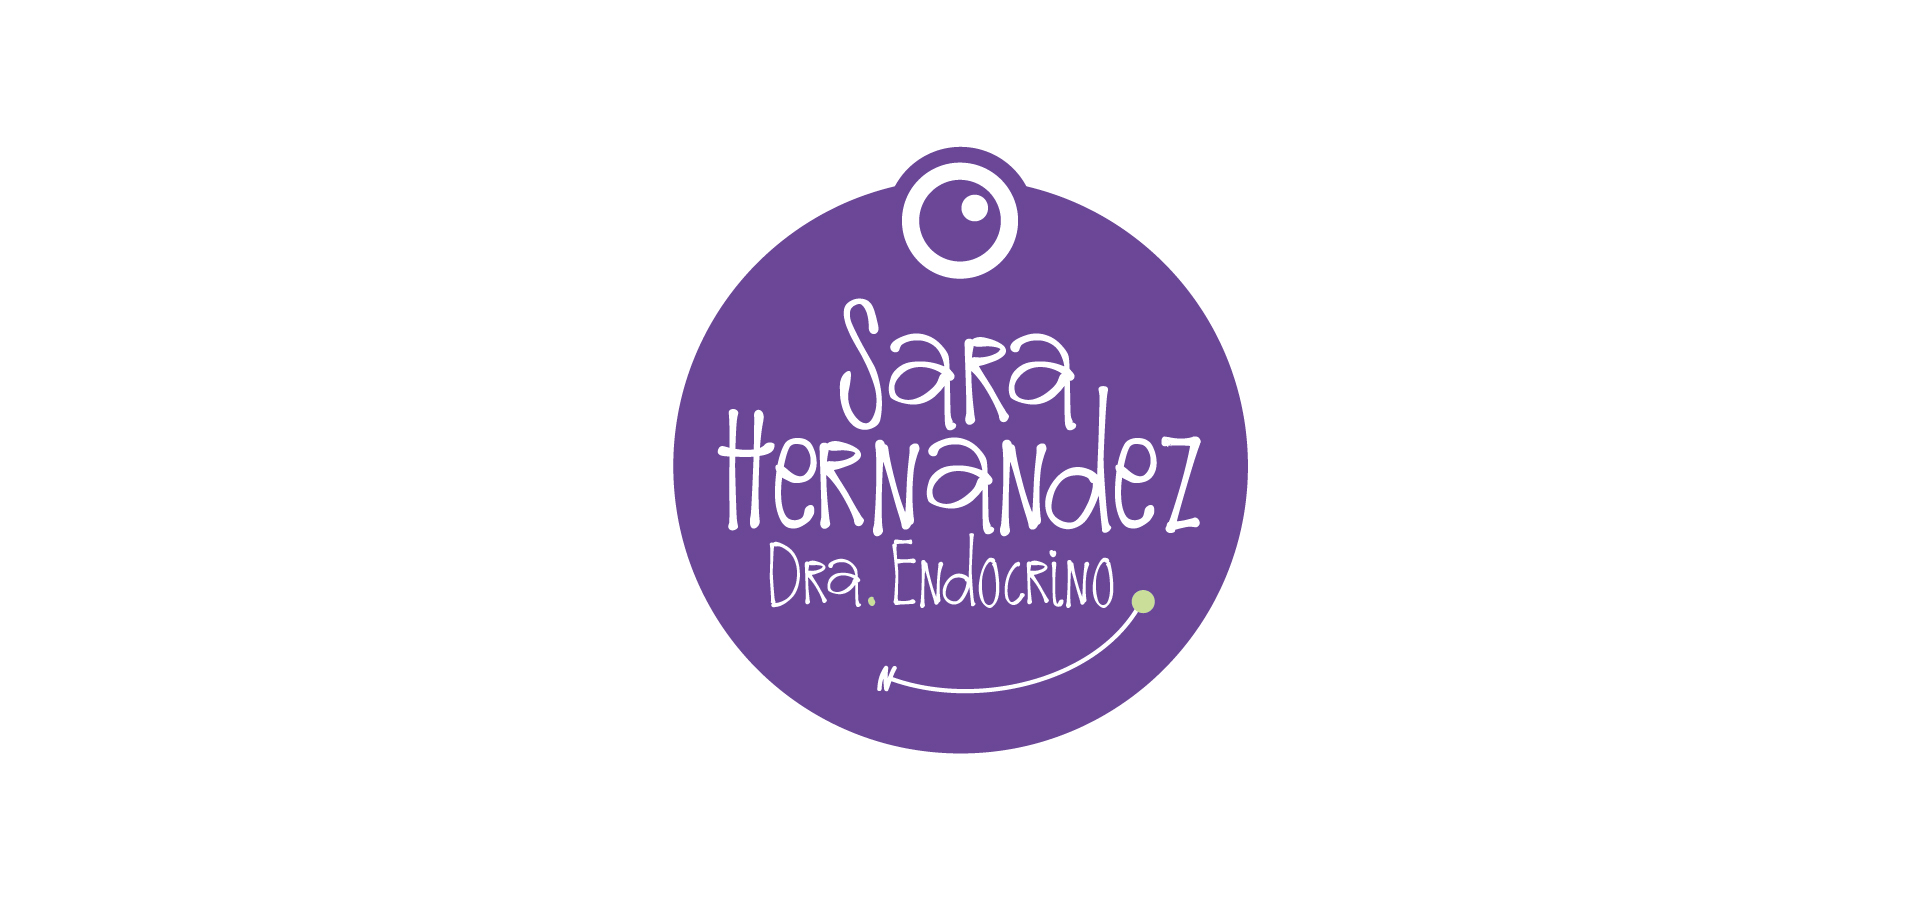 Dra Sara Hernandez | Endocrinóloga Pediatra